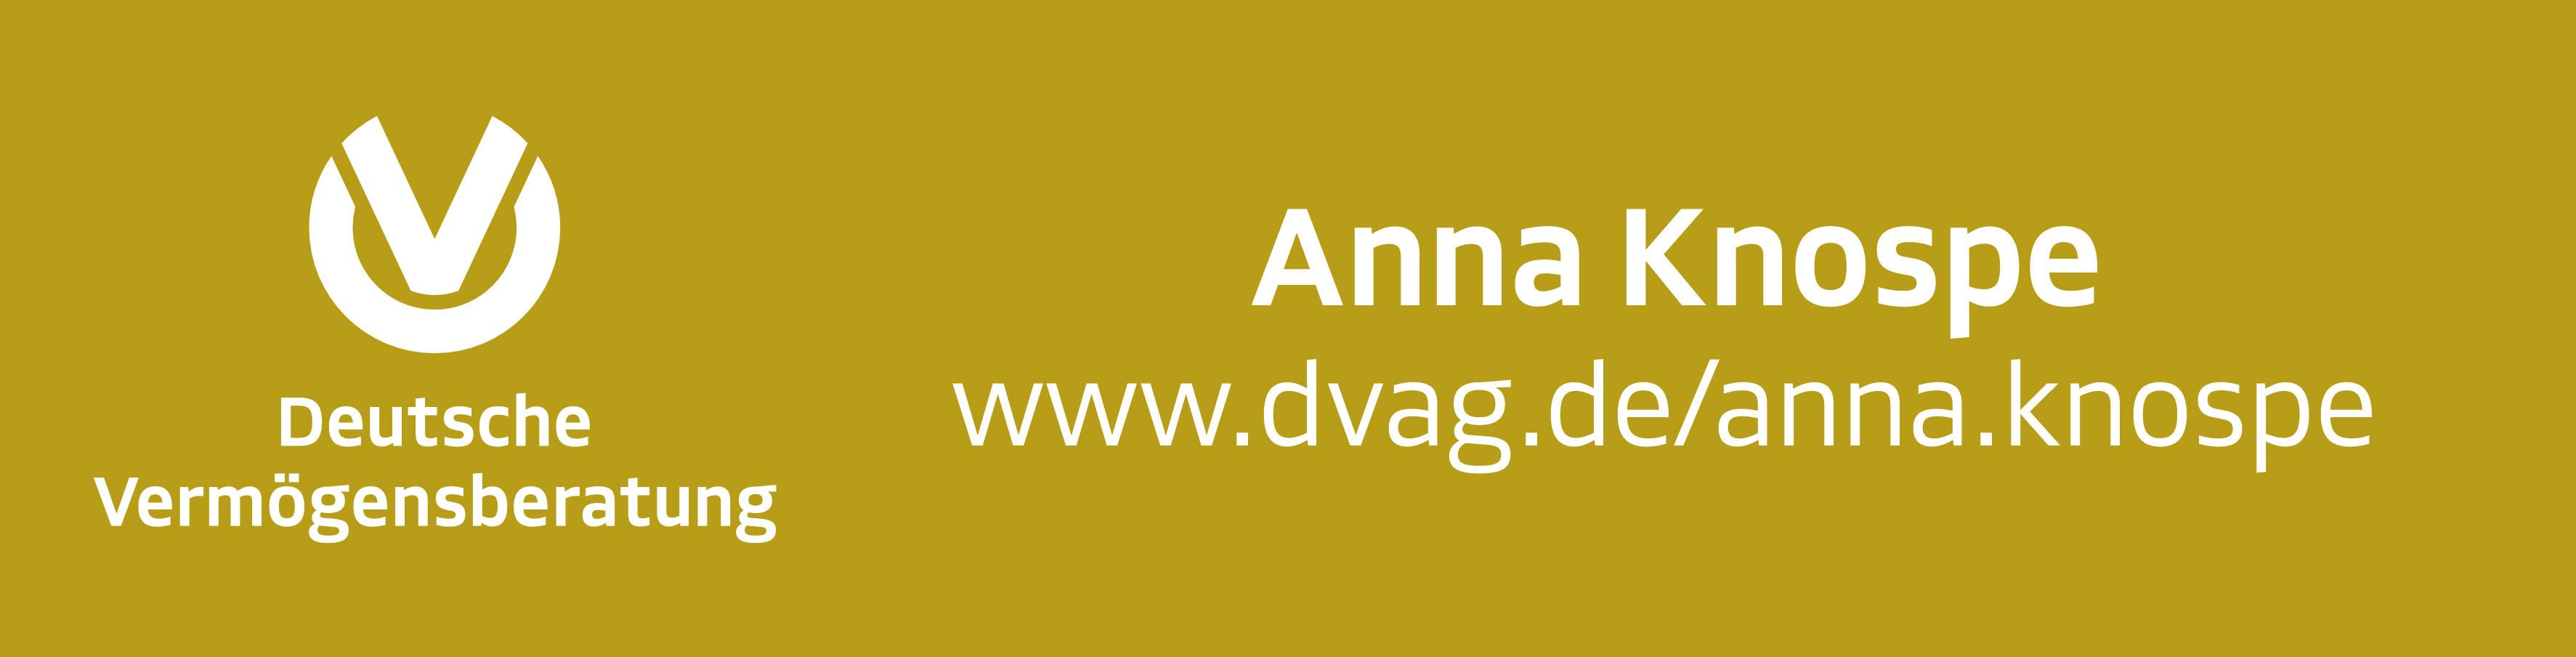 Anna Knospe - DVAG